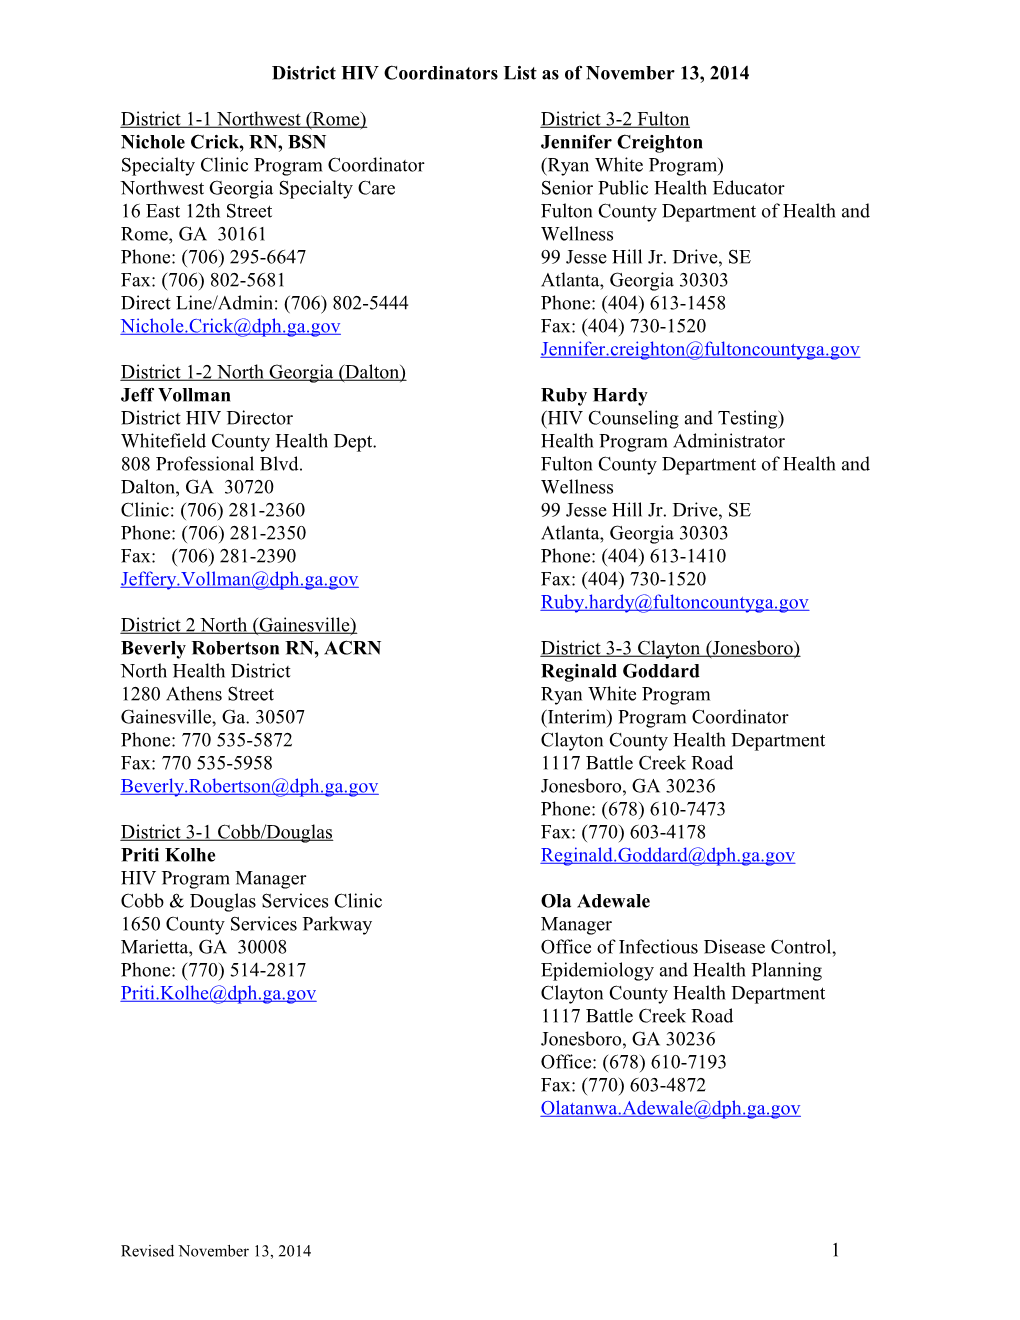 District HIV Coordinators List As of November 13, 2014